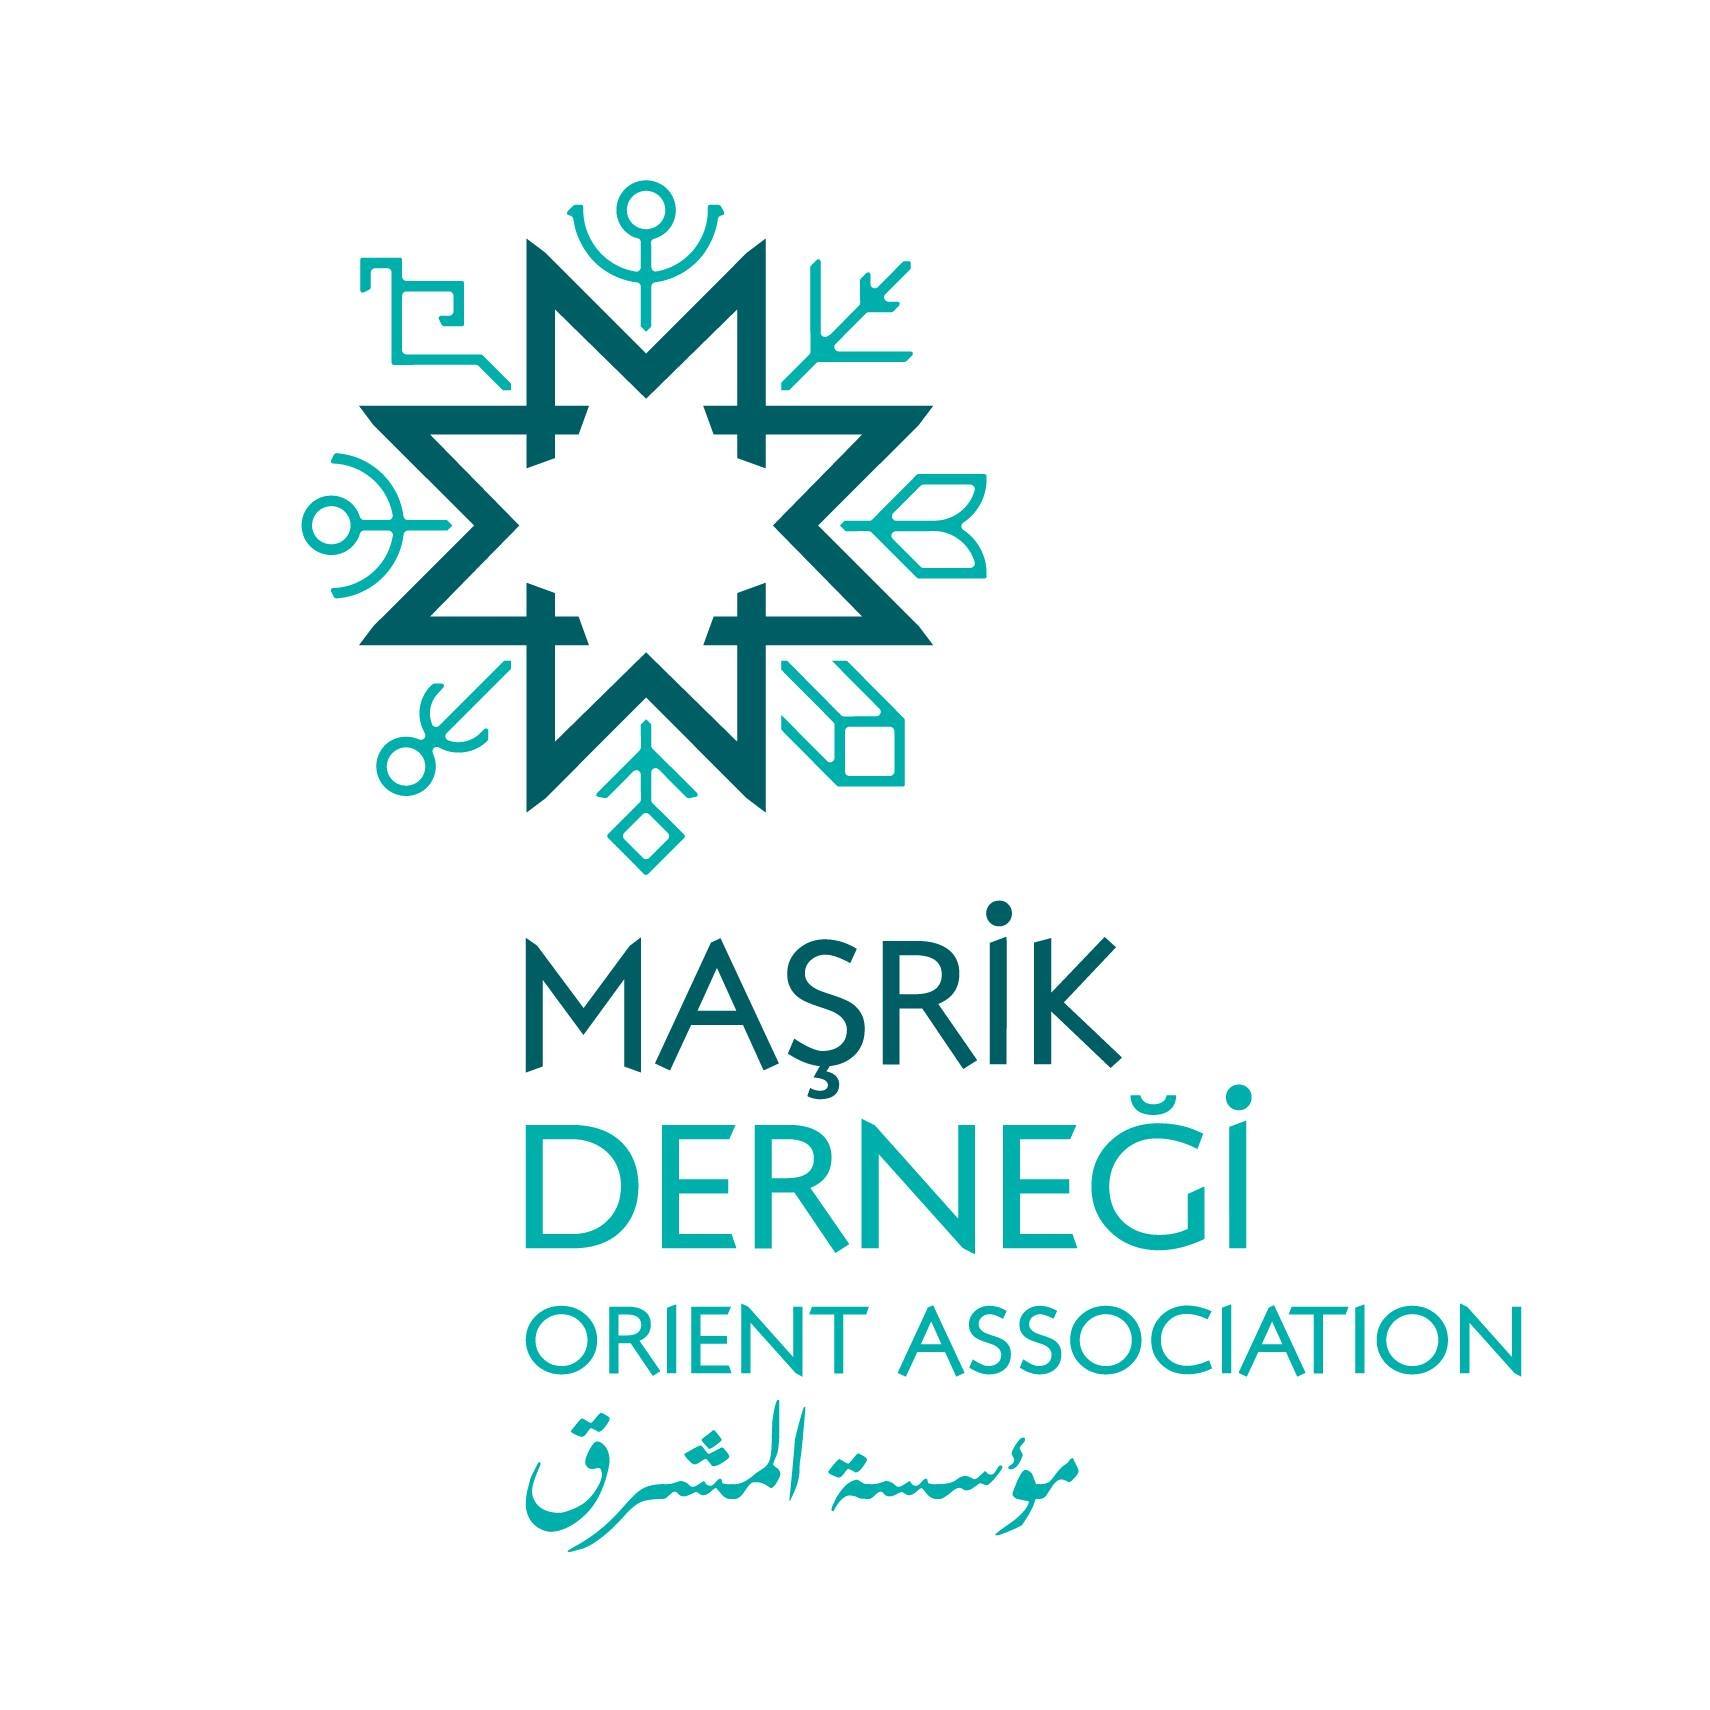 Orient Association